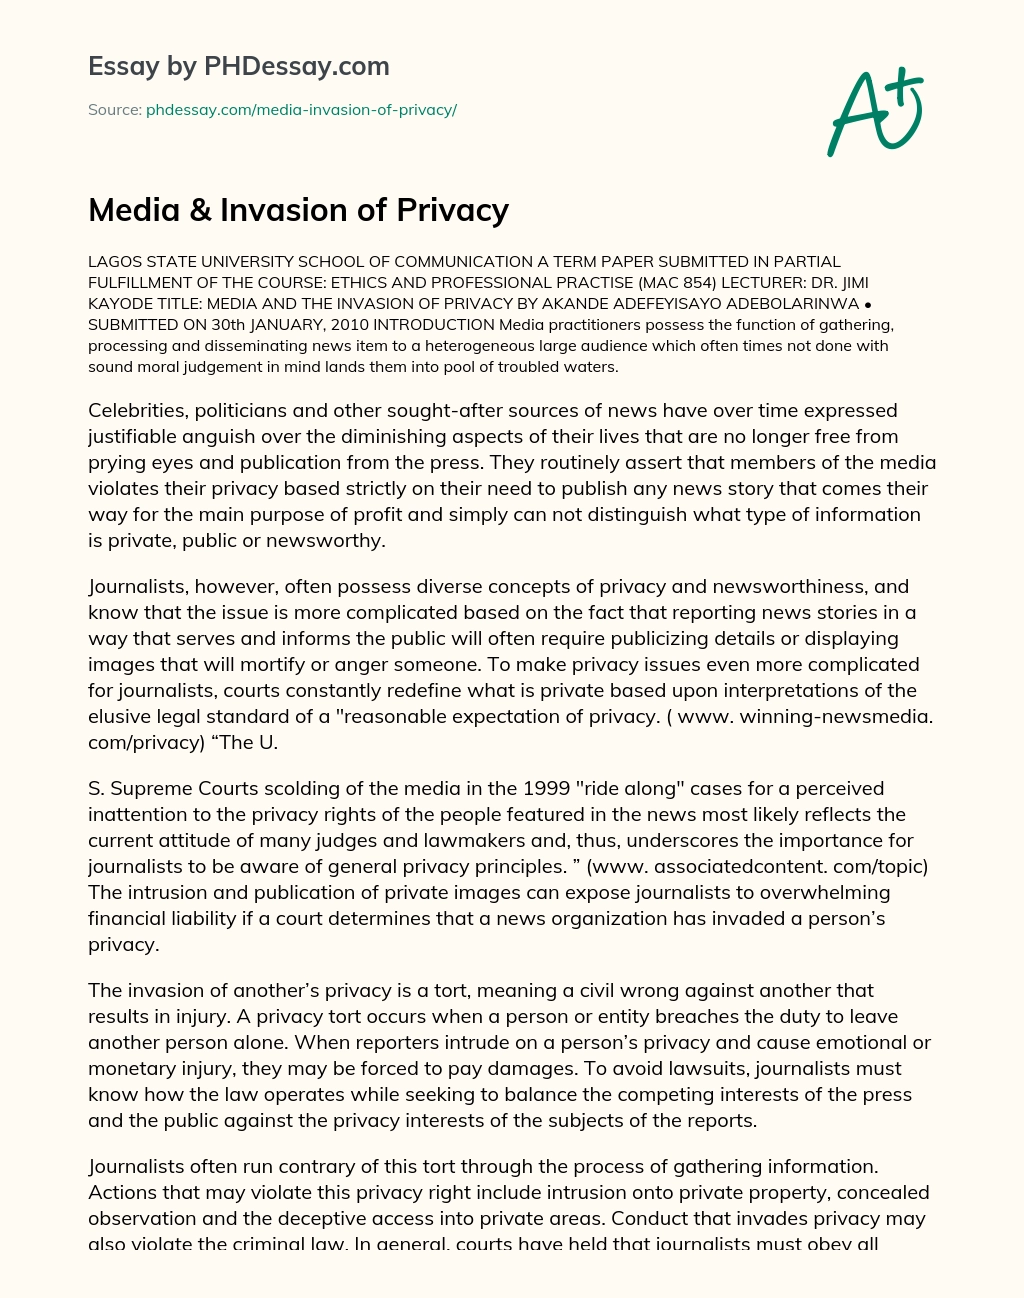 Media & Invasion of Privacy essay